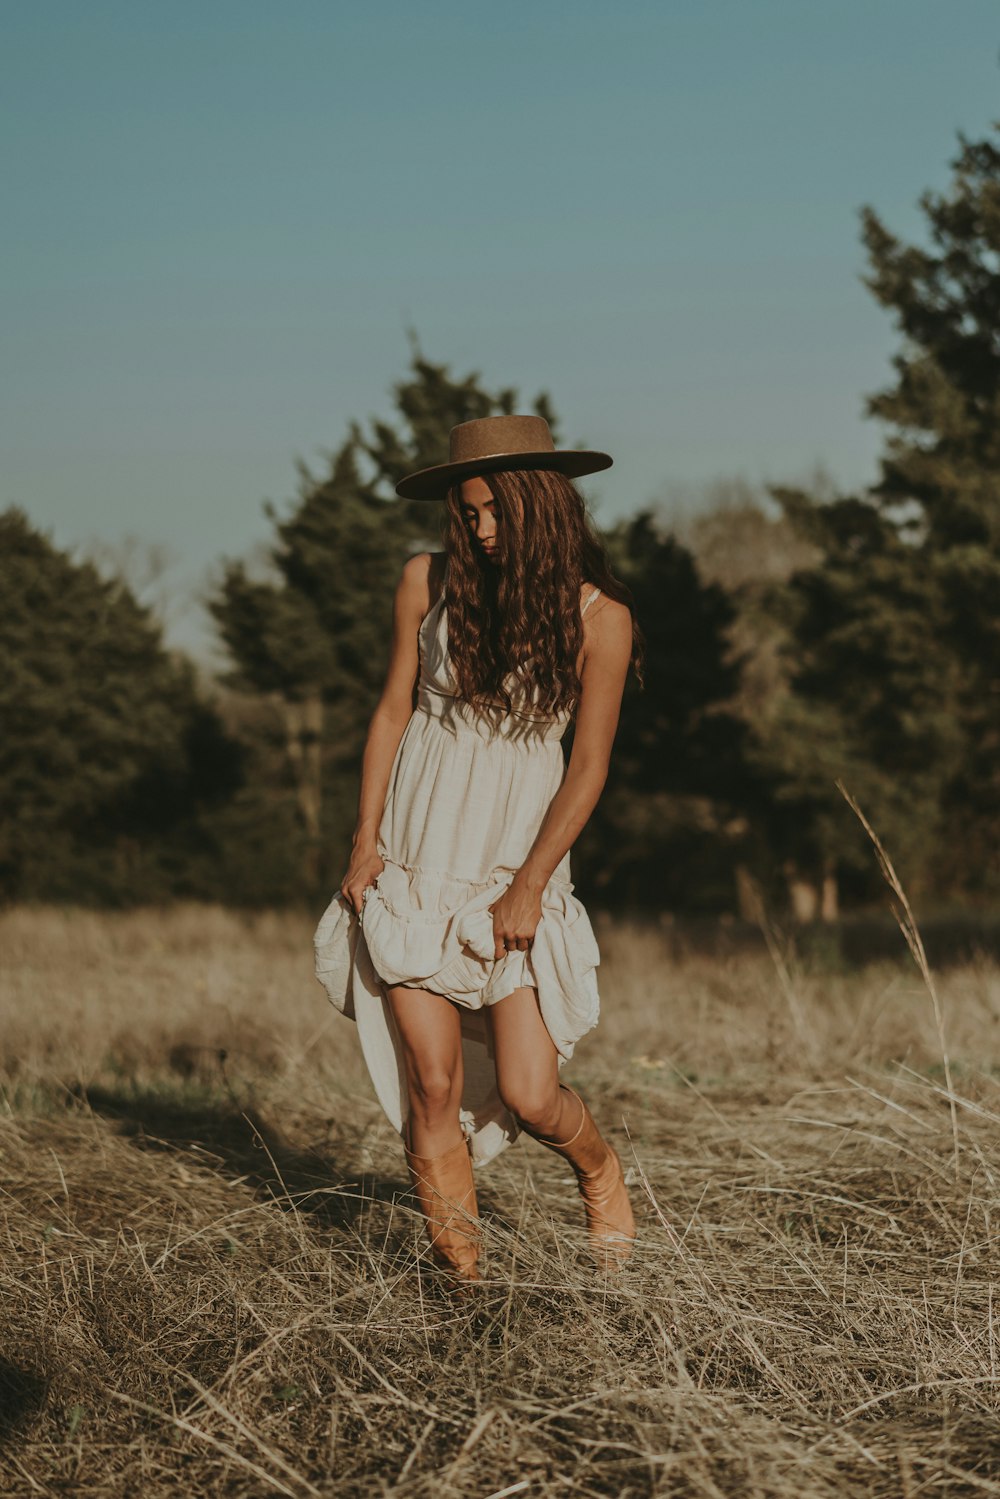 a woman in a hat walking through a field